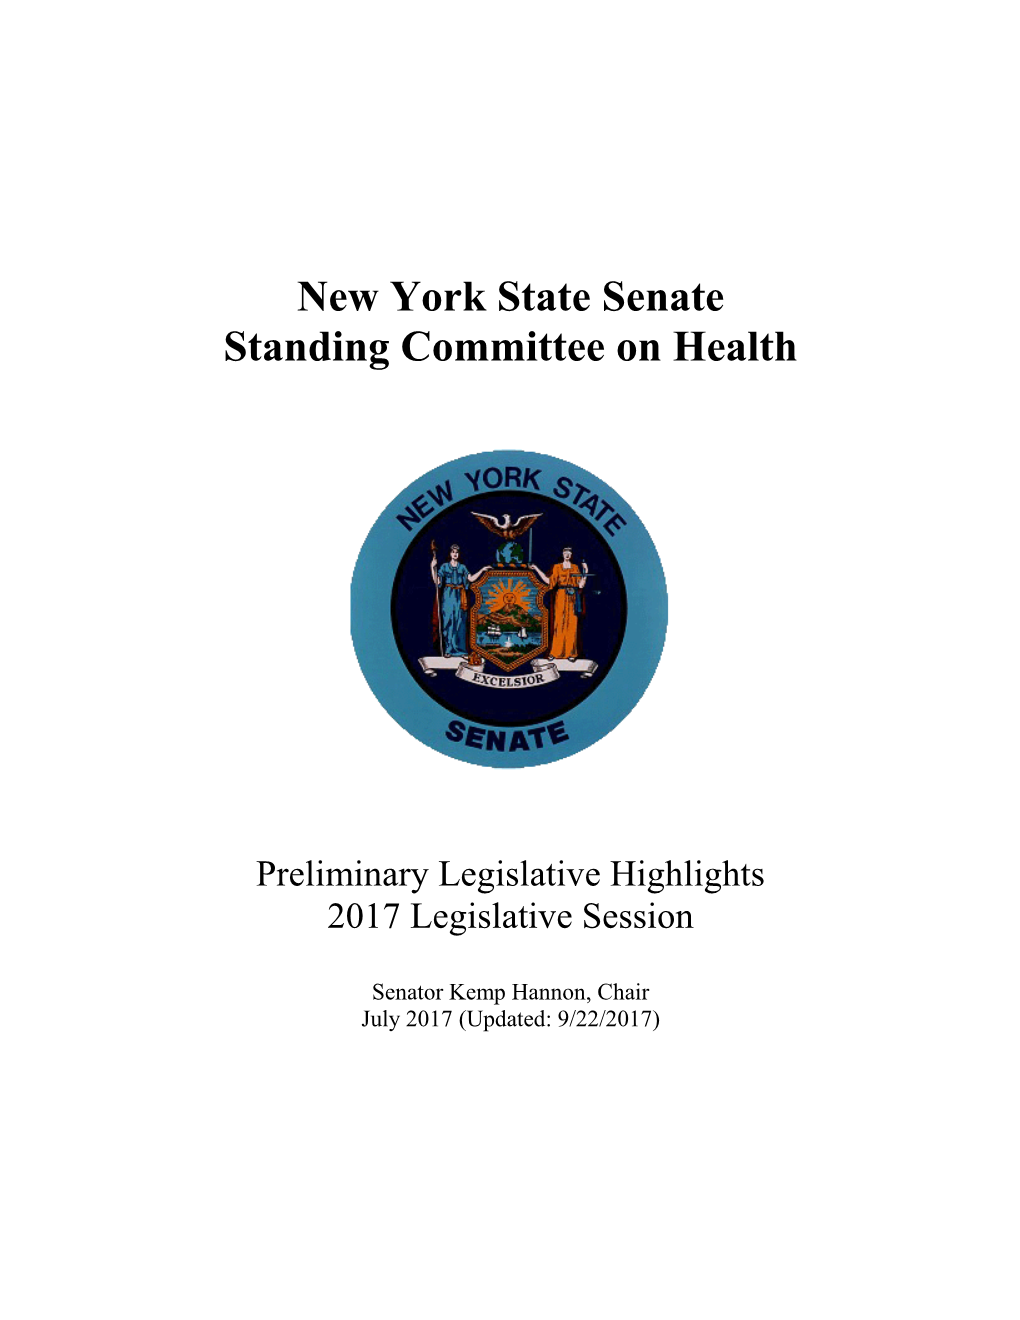 New York State Senate Standing Committee on Health